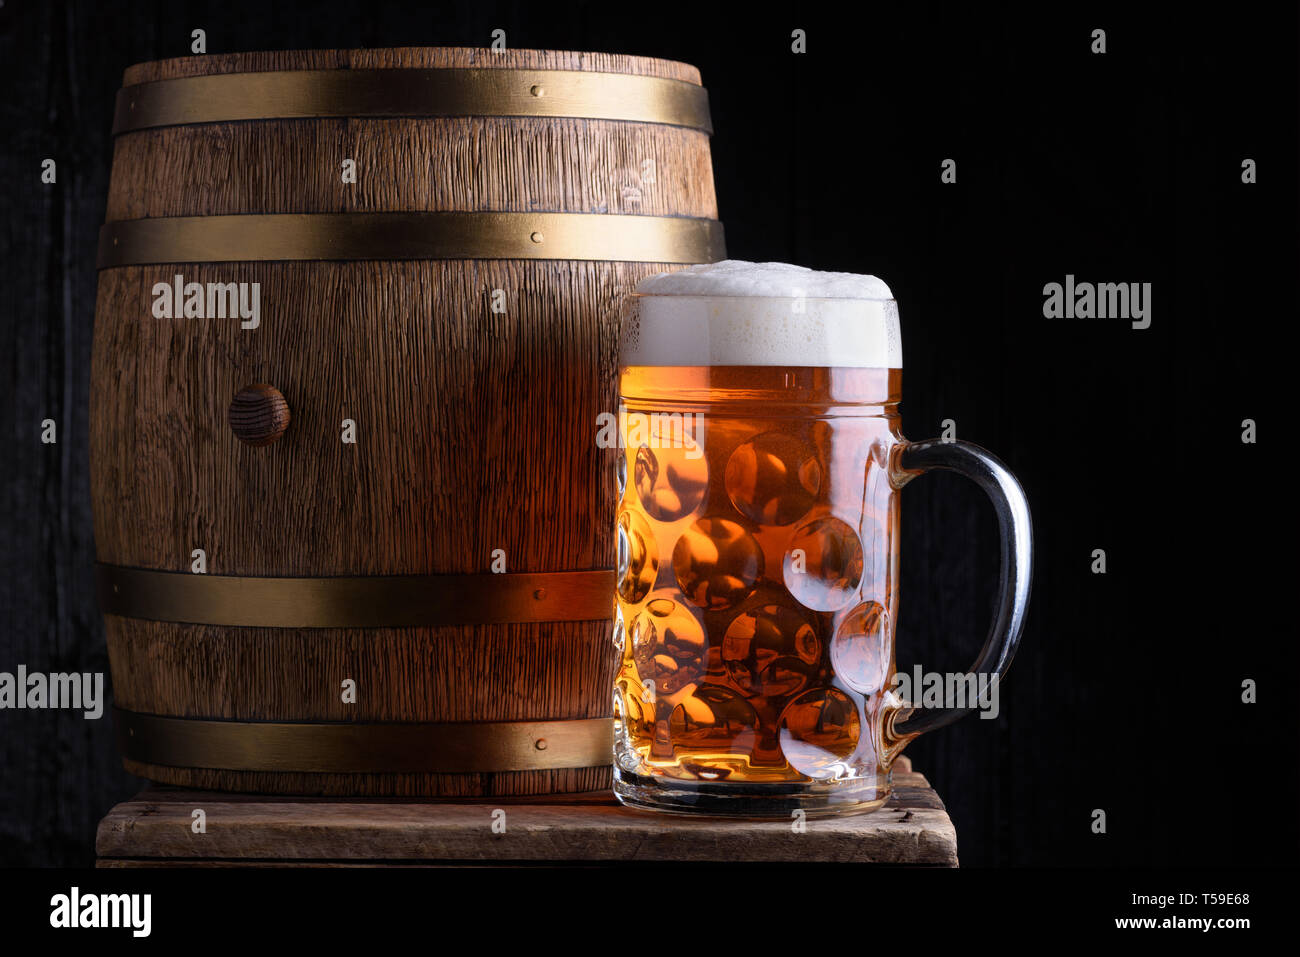 Big beer mug and beer barrel on wooden table still life Stock Photo - Alamy